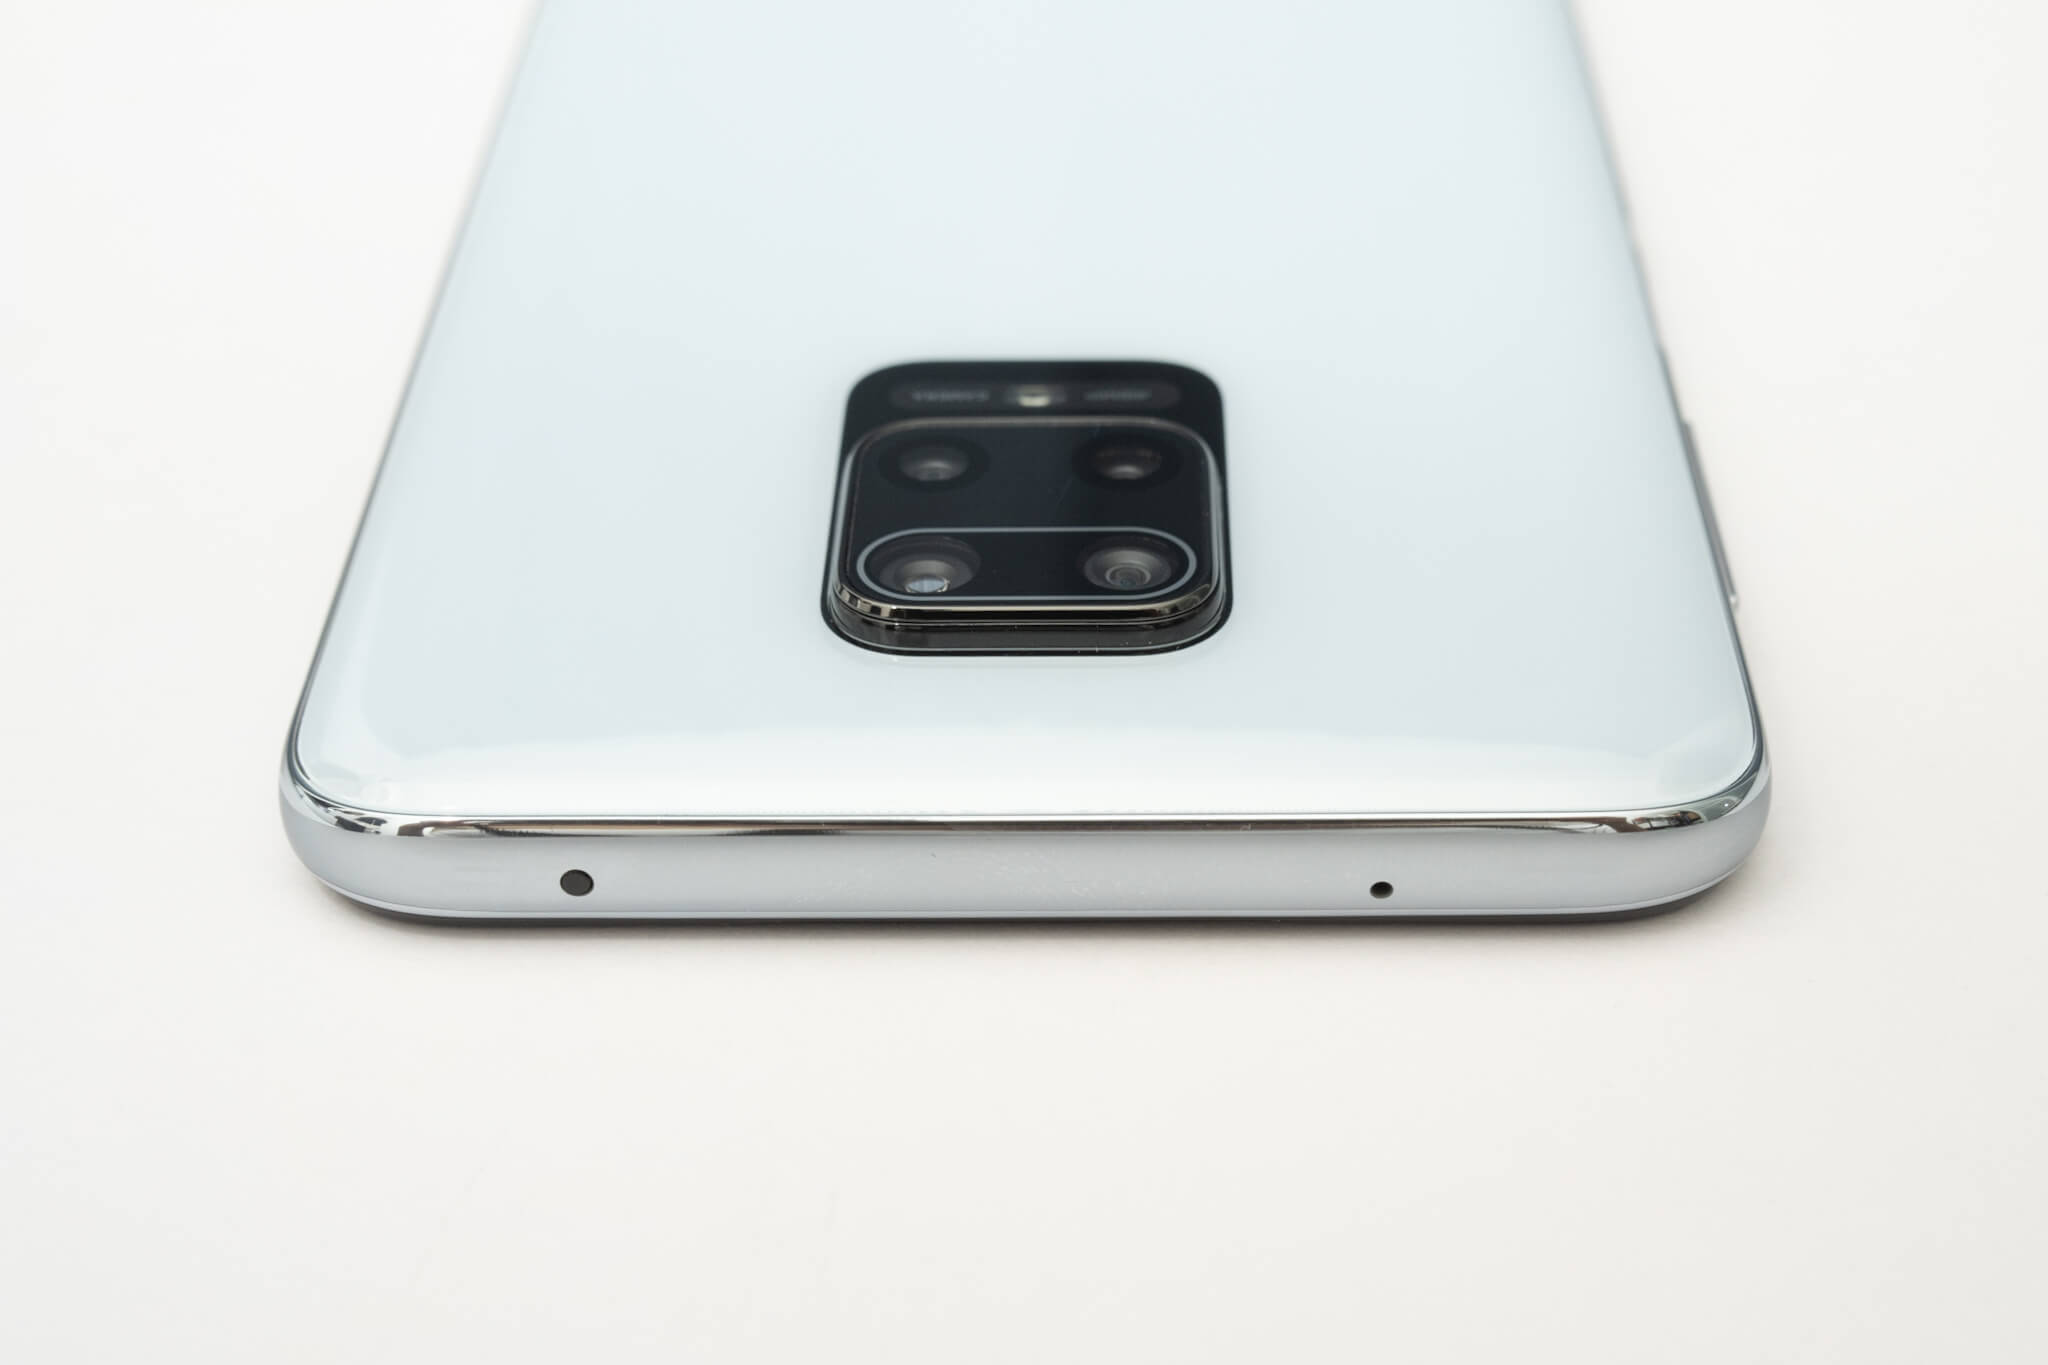 Redmi Note 9S ホワイト 4GB/64GB 未開封 週末値下げ